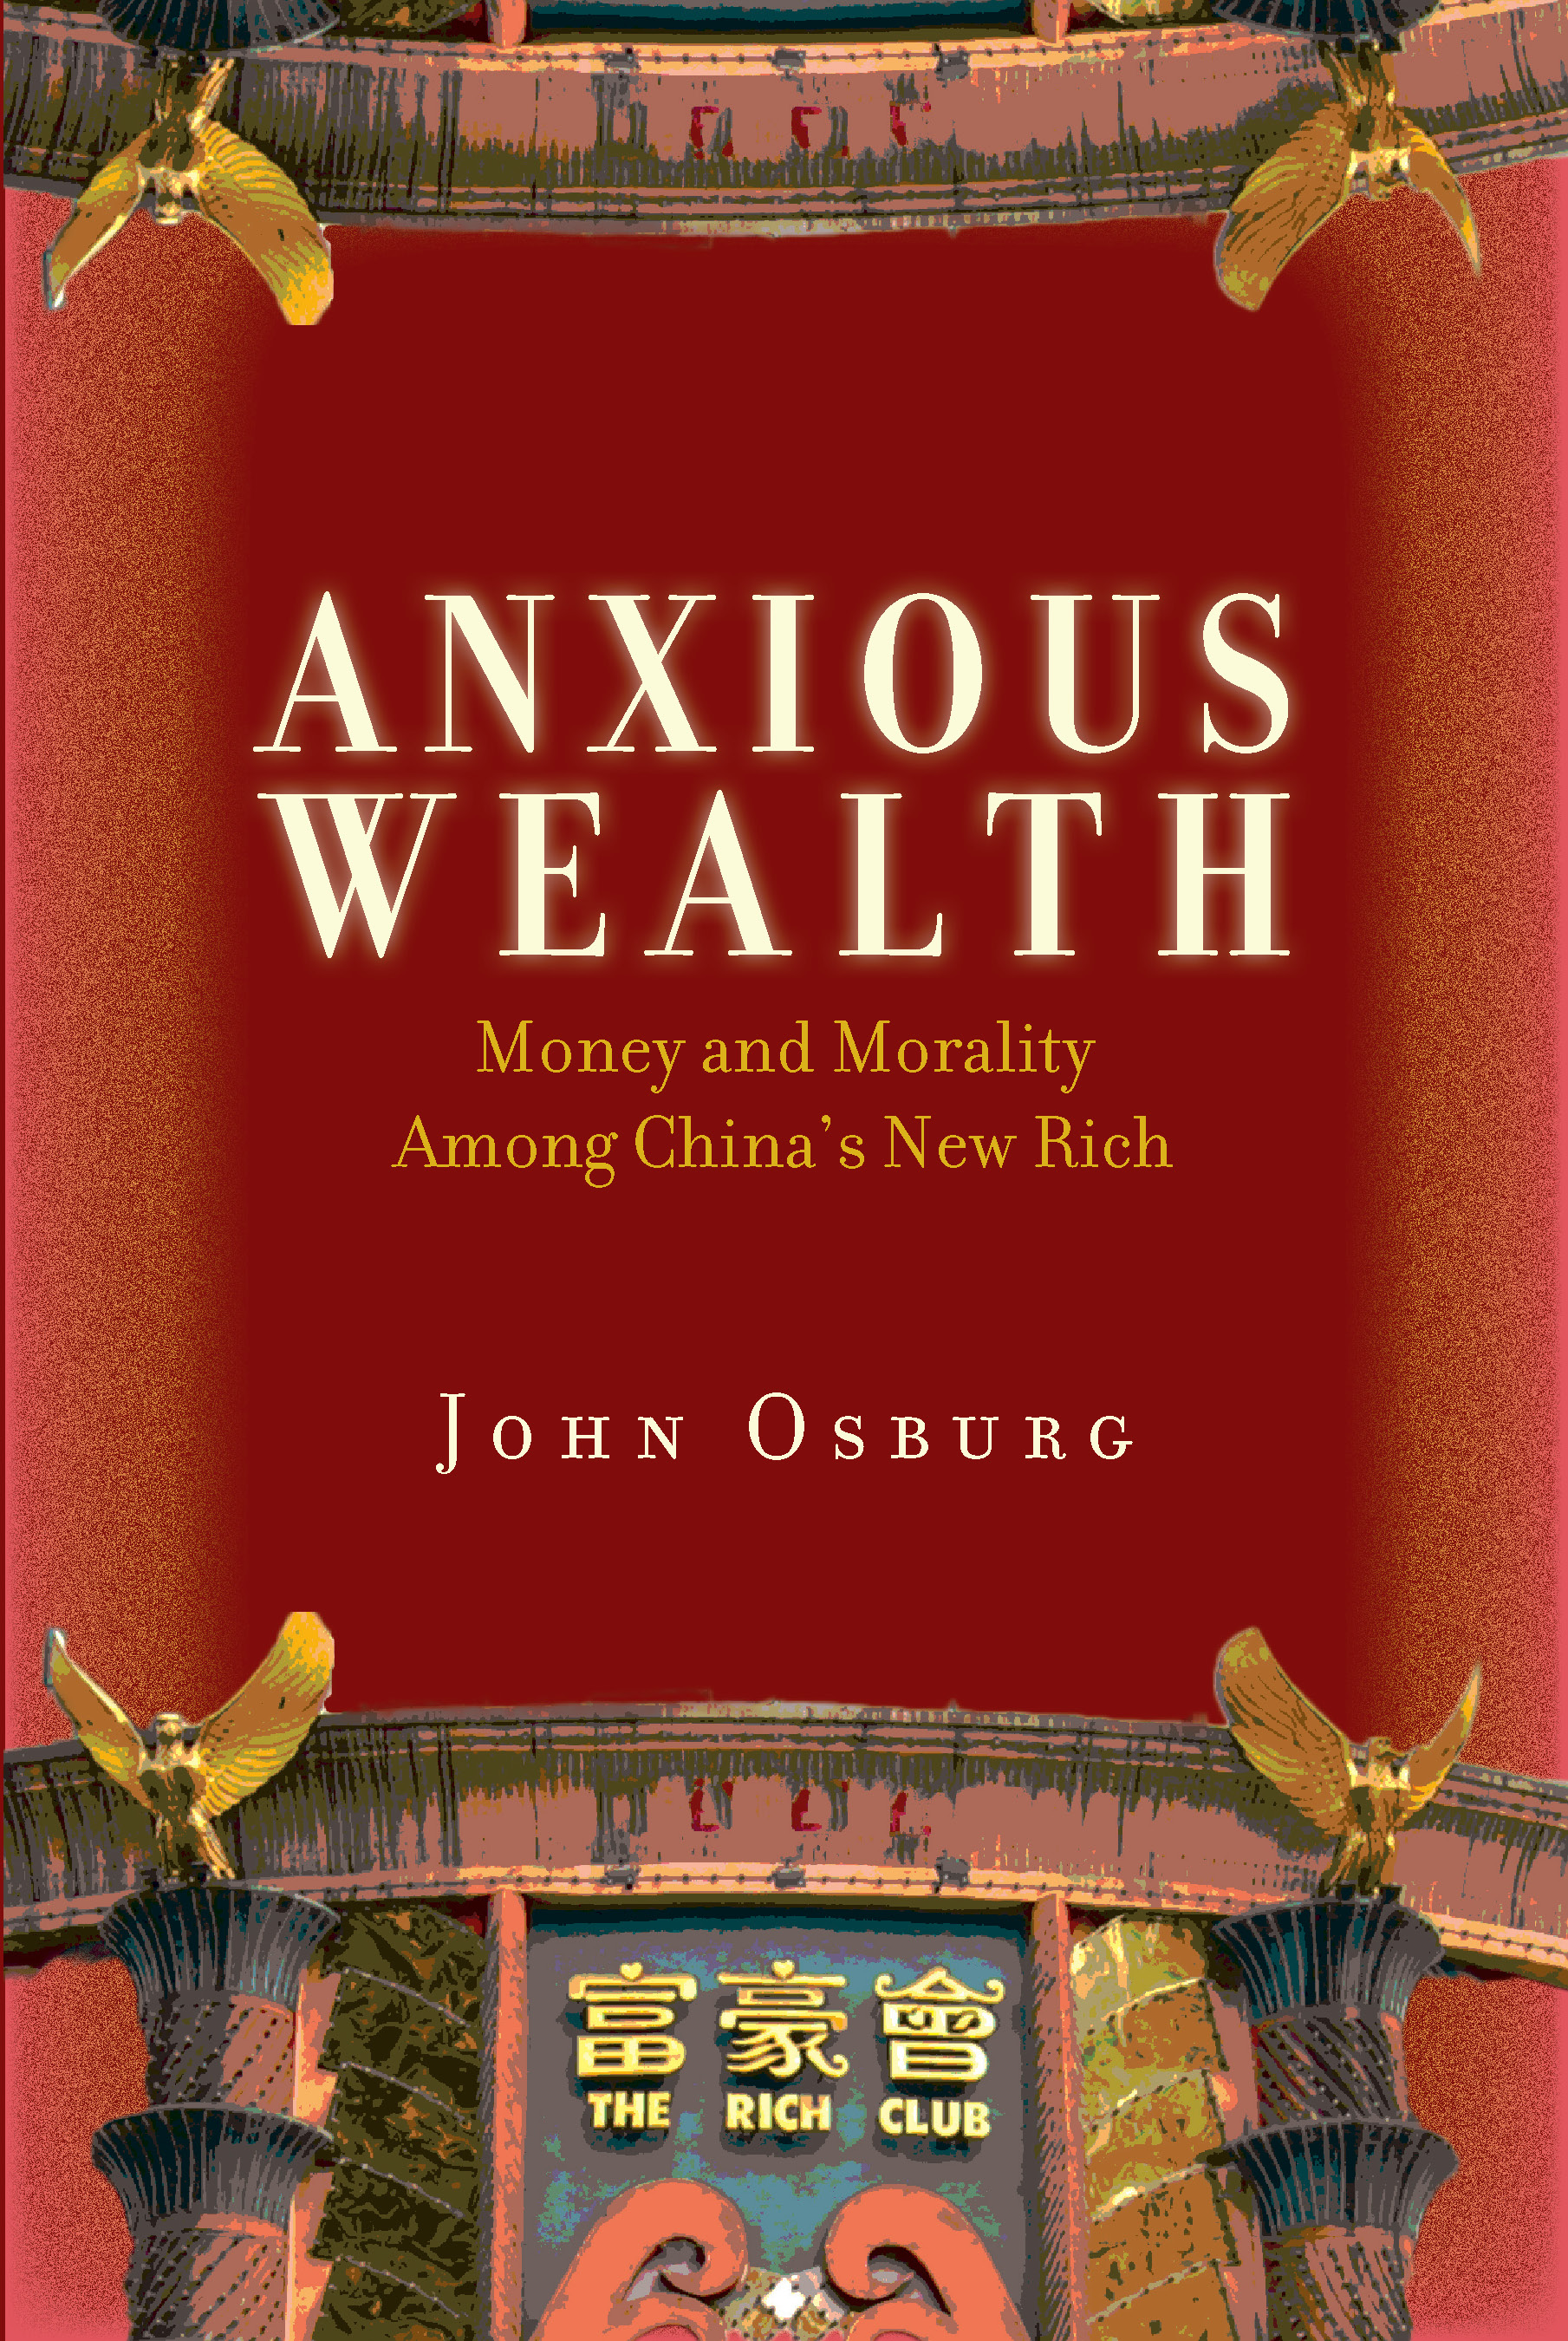 Anxious Wealth